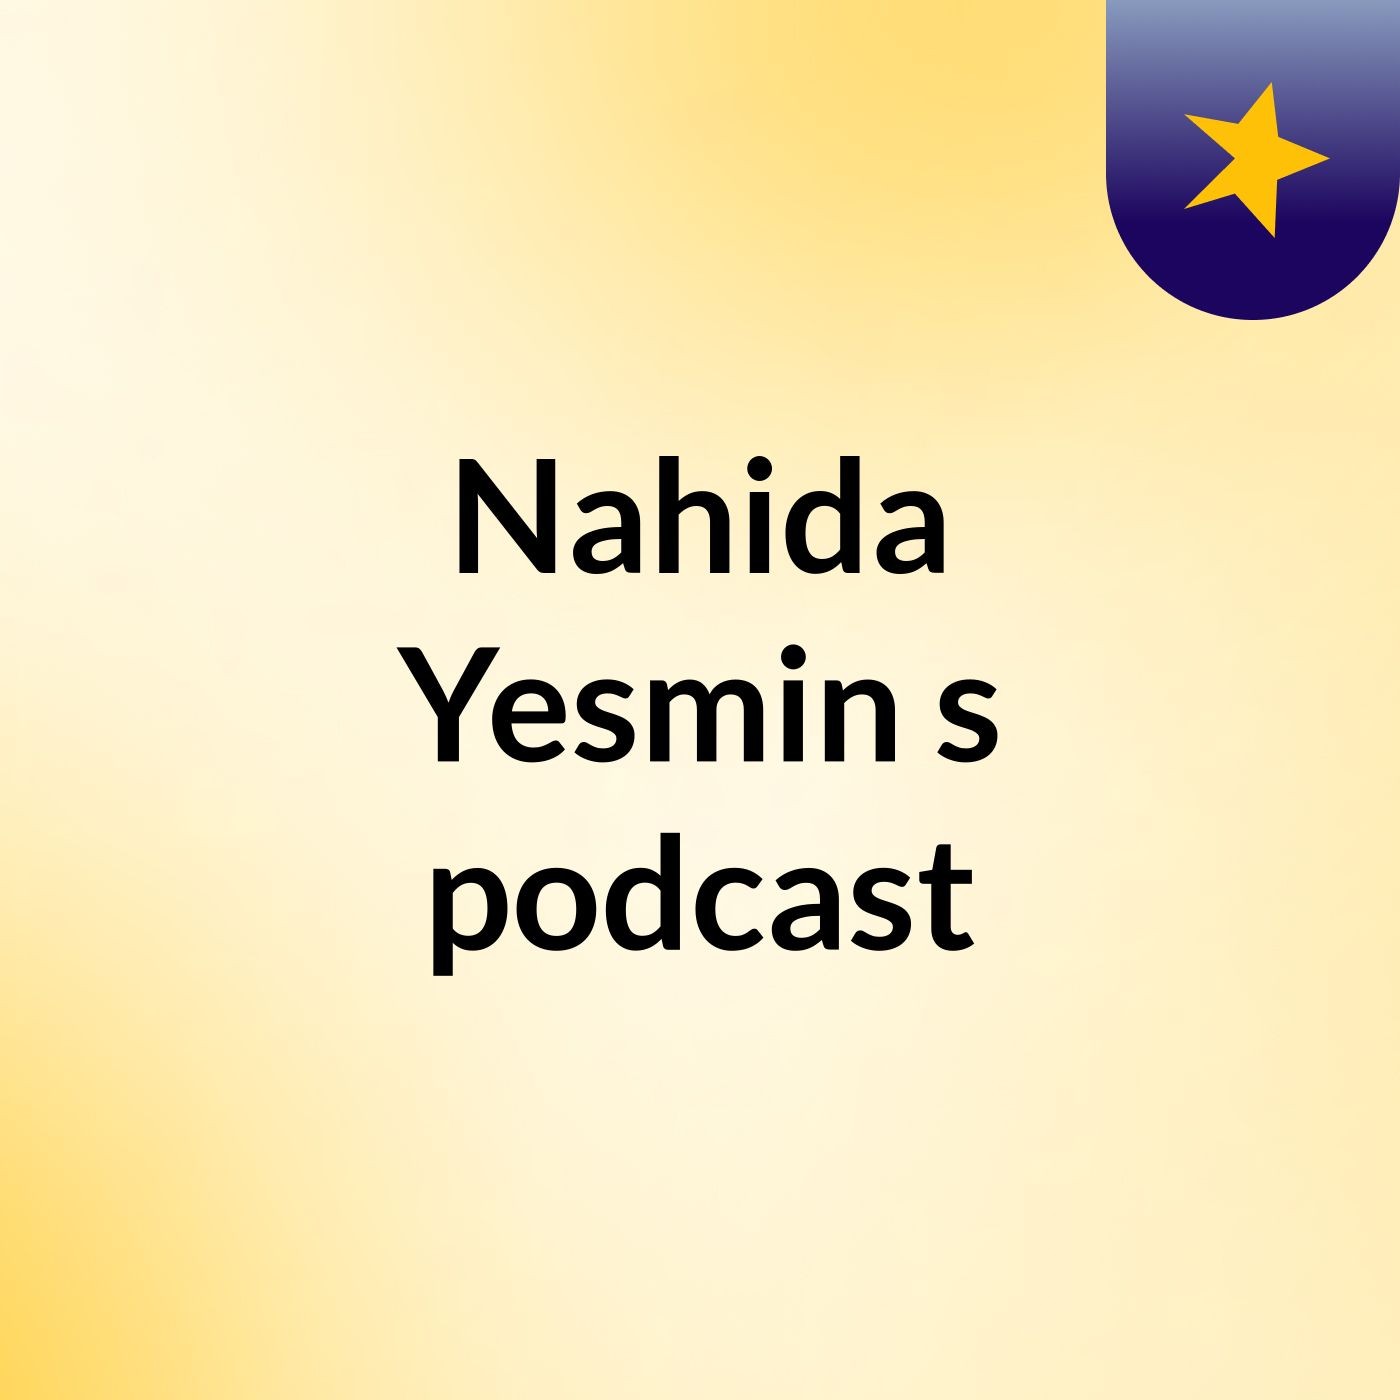 Nahida Yesmin's podcast